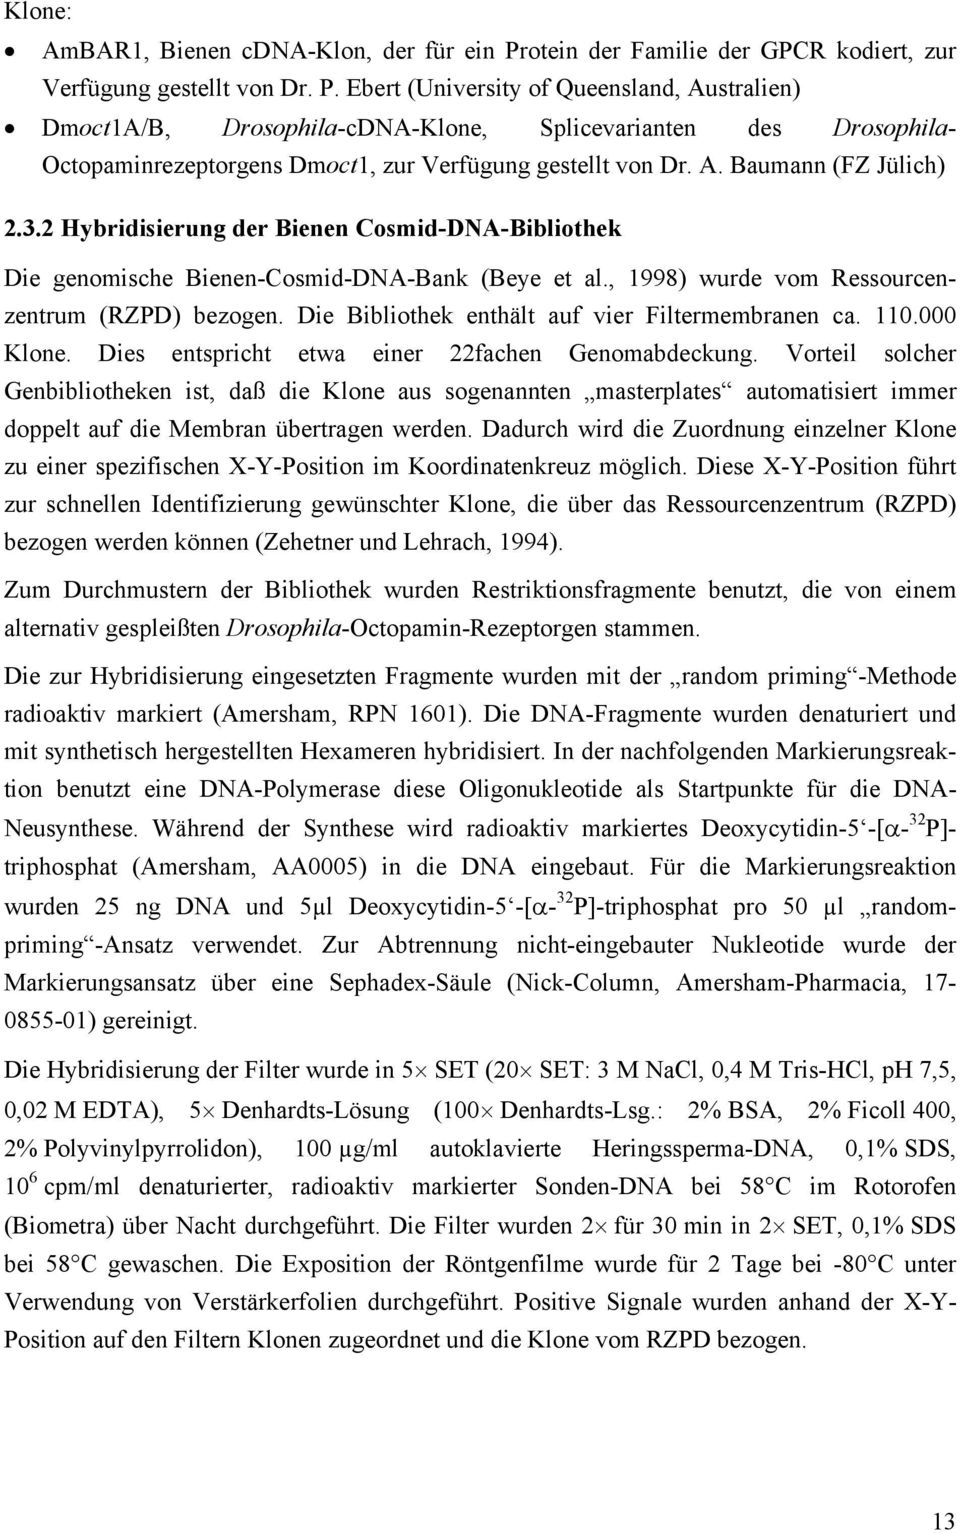 Ebert (University of Queensland, Australien) Dmoct1A/B, Drosophila-cDNA-Klone, Splicevarianten des Drosophila- Octopaminrezeptorgens Dmoct1, zur Verfügung gestellt von Dr. A. Baumann (FZ Jülich) 2.3.